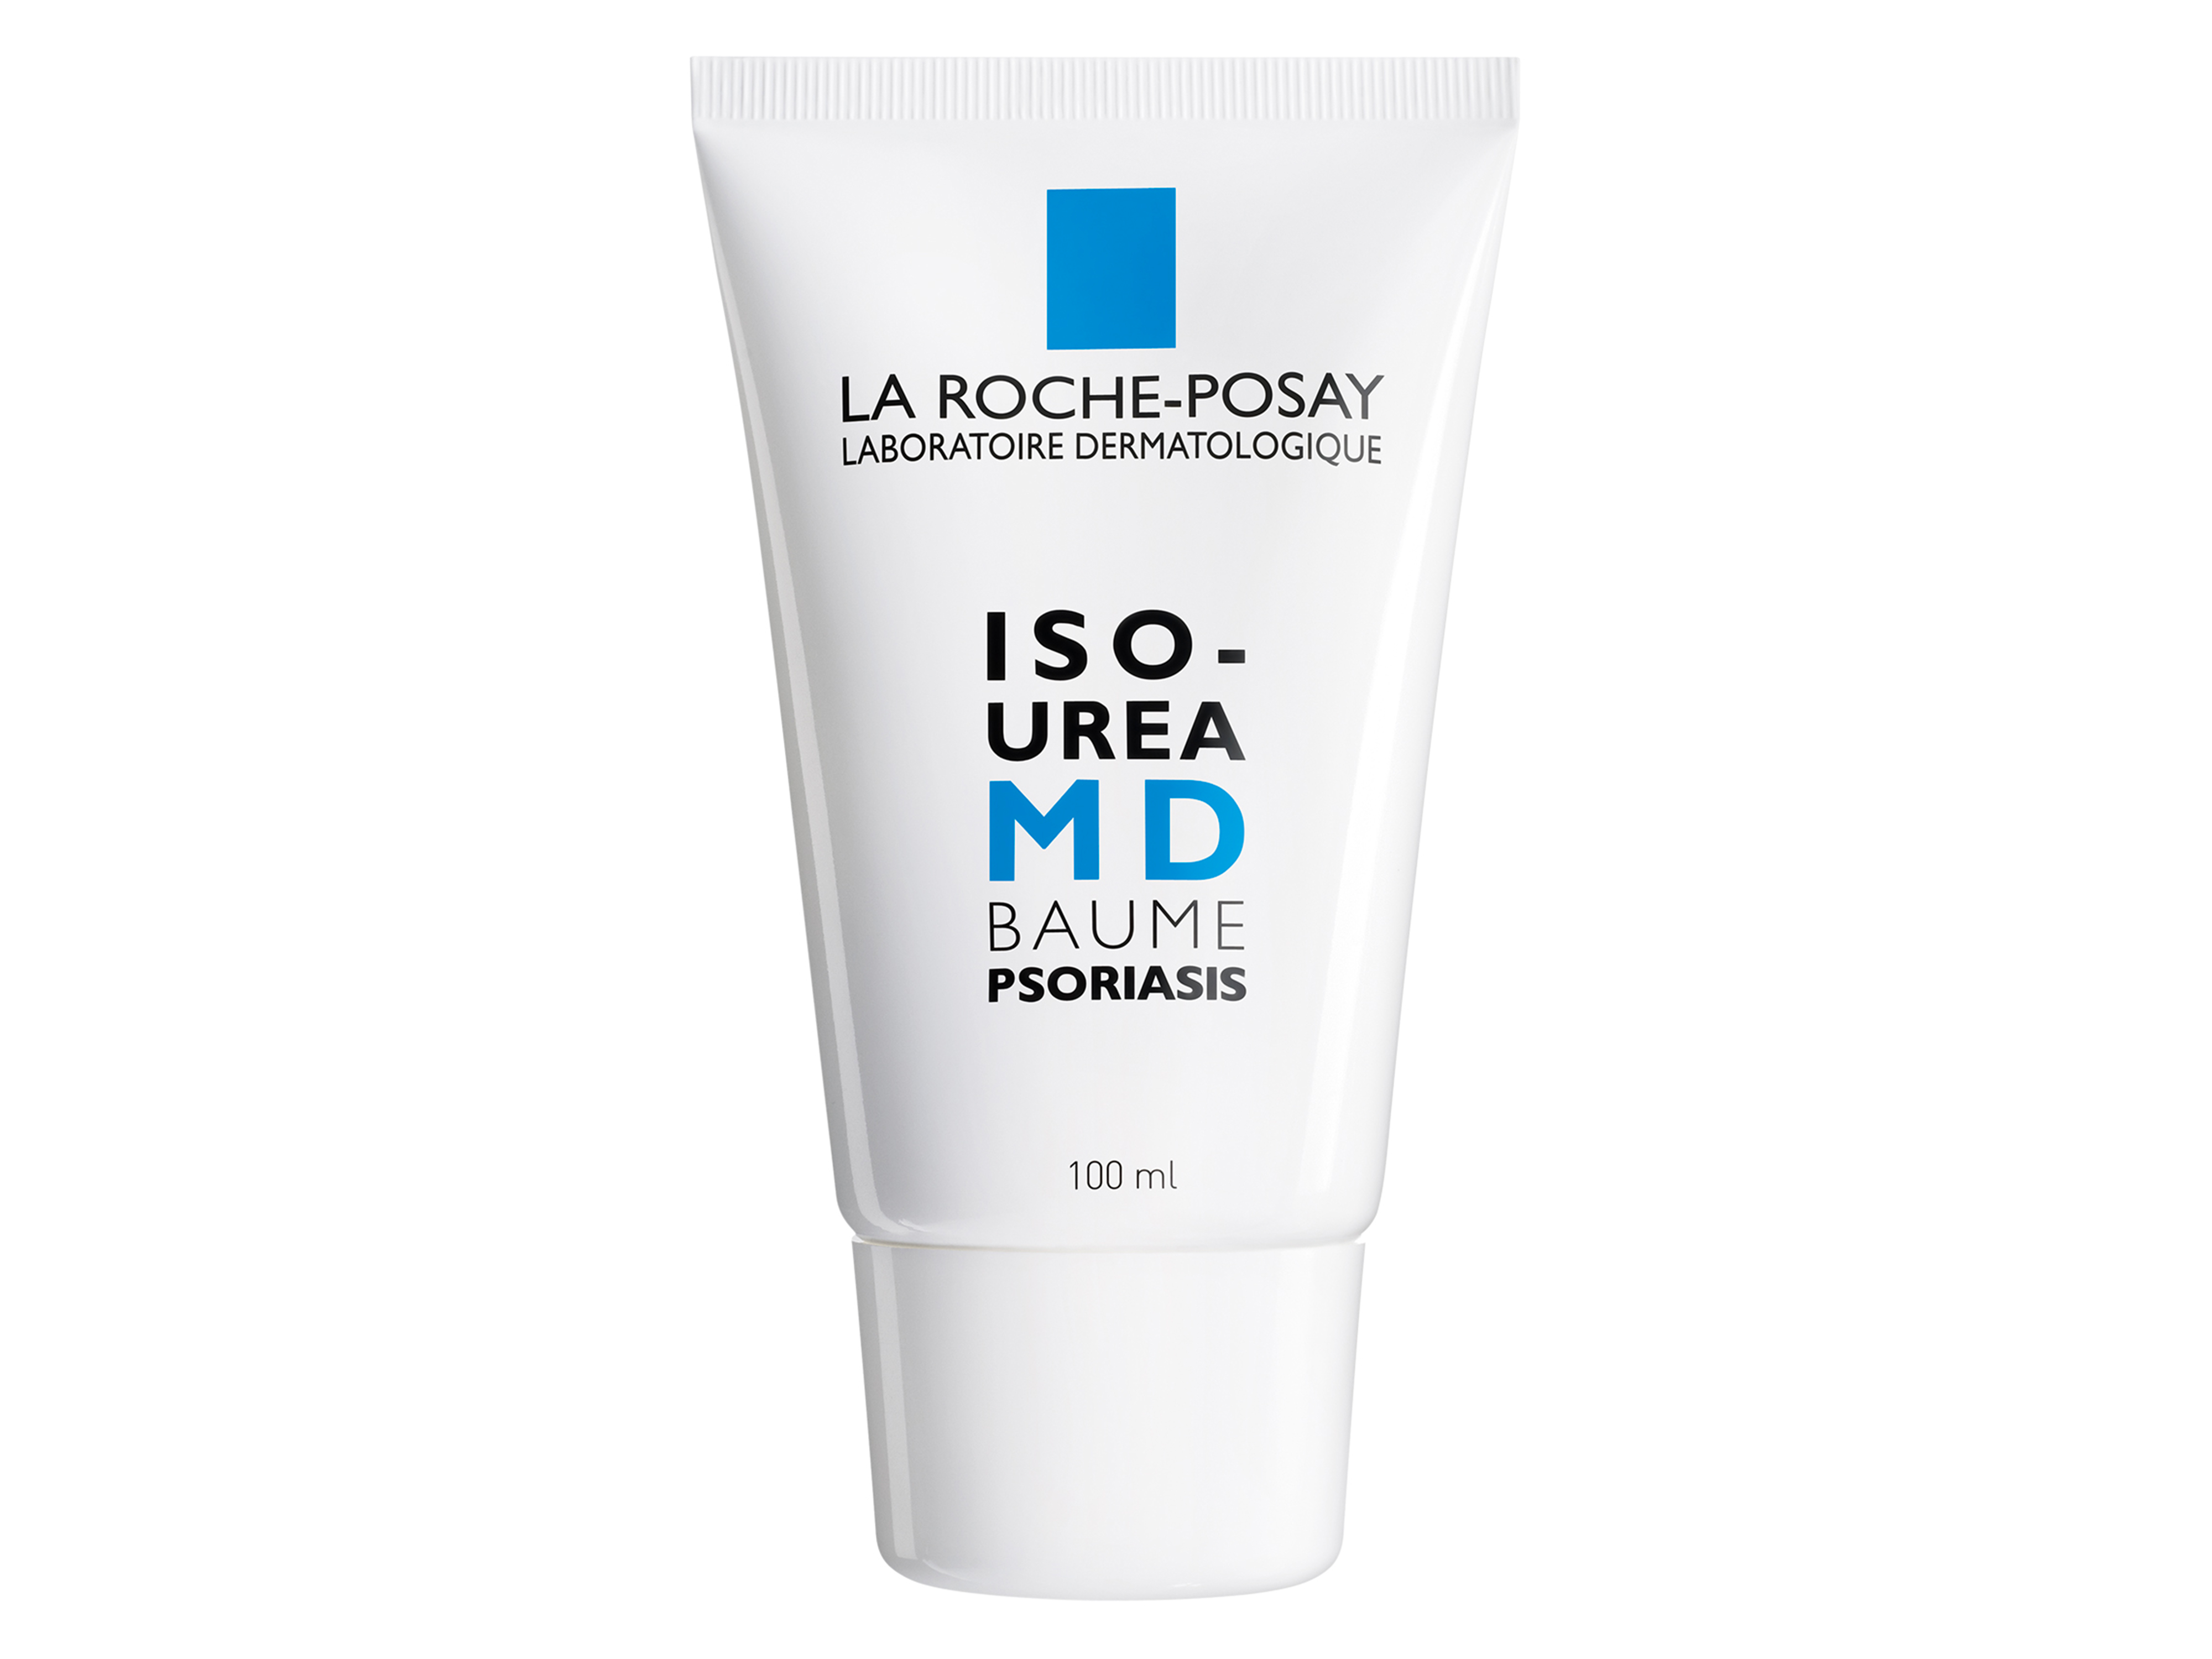 La Roche-Posay LaRoche-Posay Iso-Urea MD balm, 100 ml